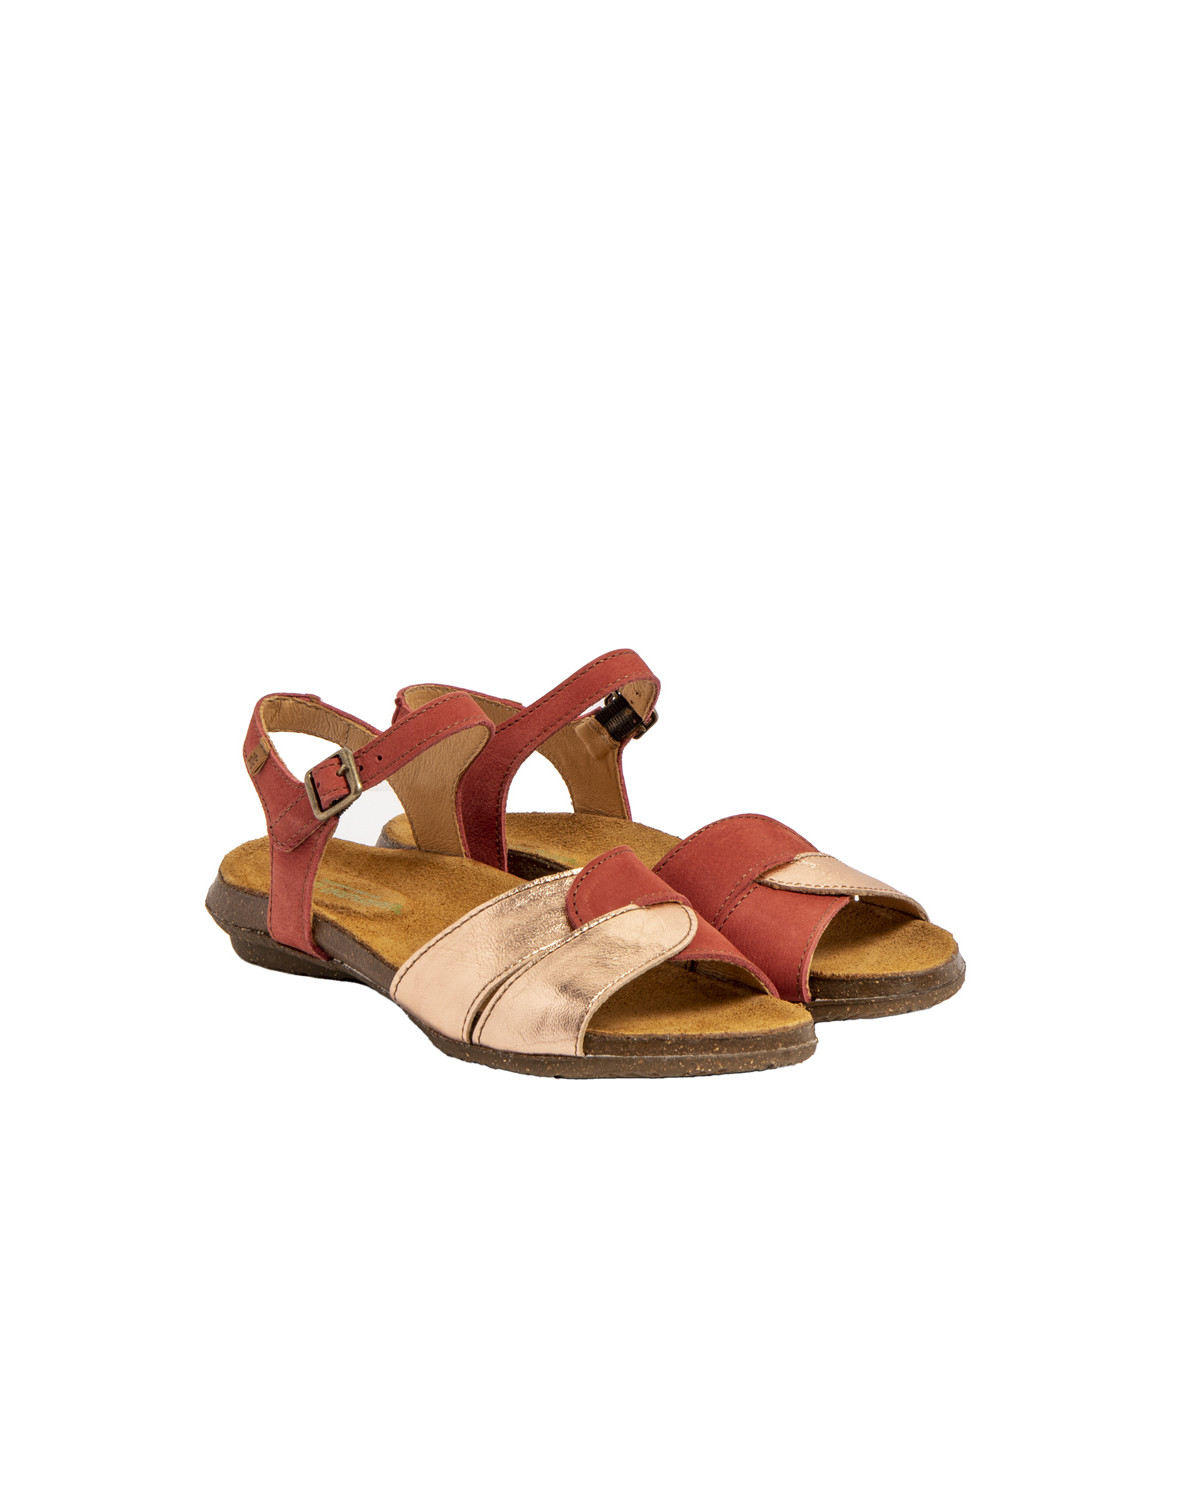 Sandales confortables plates en cuir et daim - Rose - El naturalista